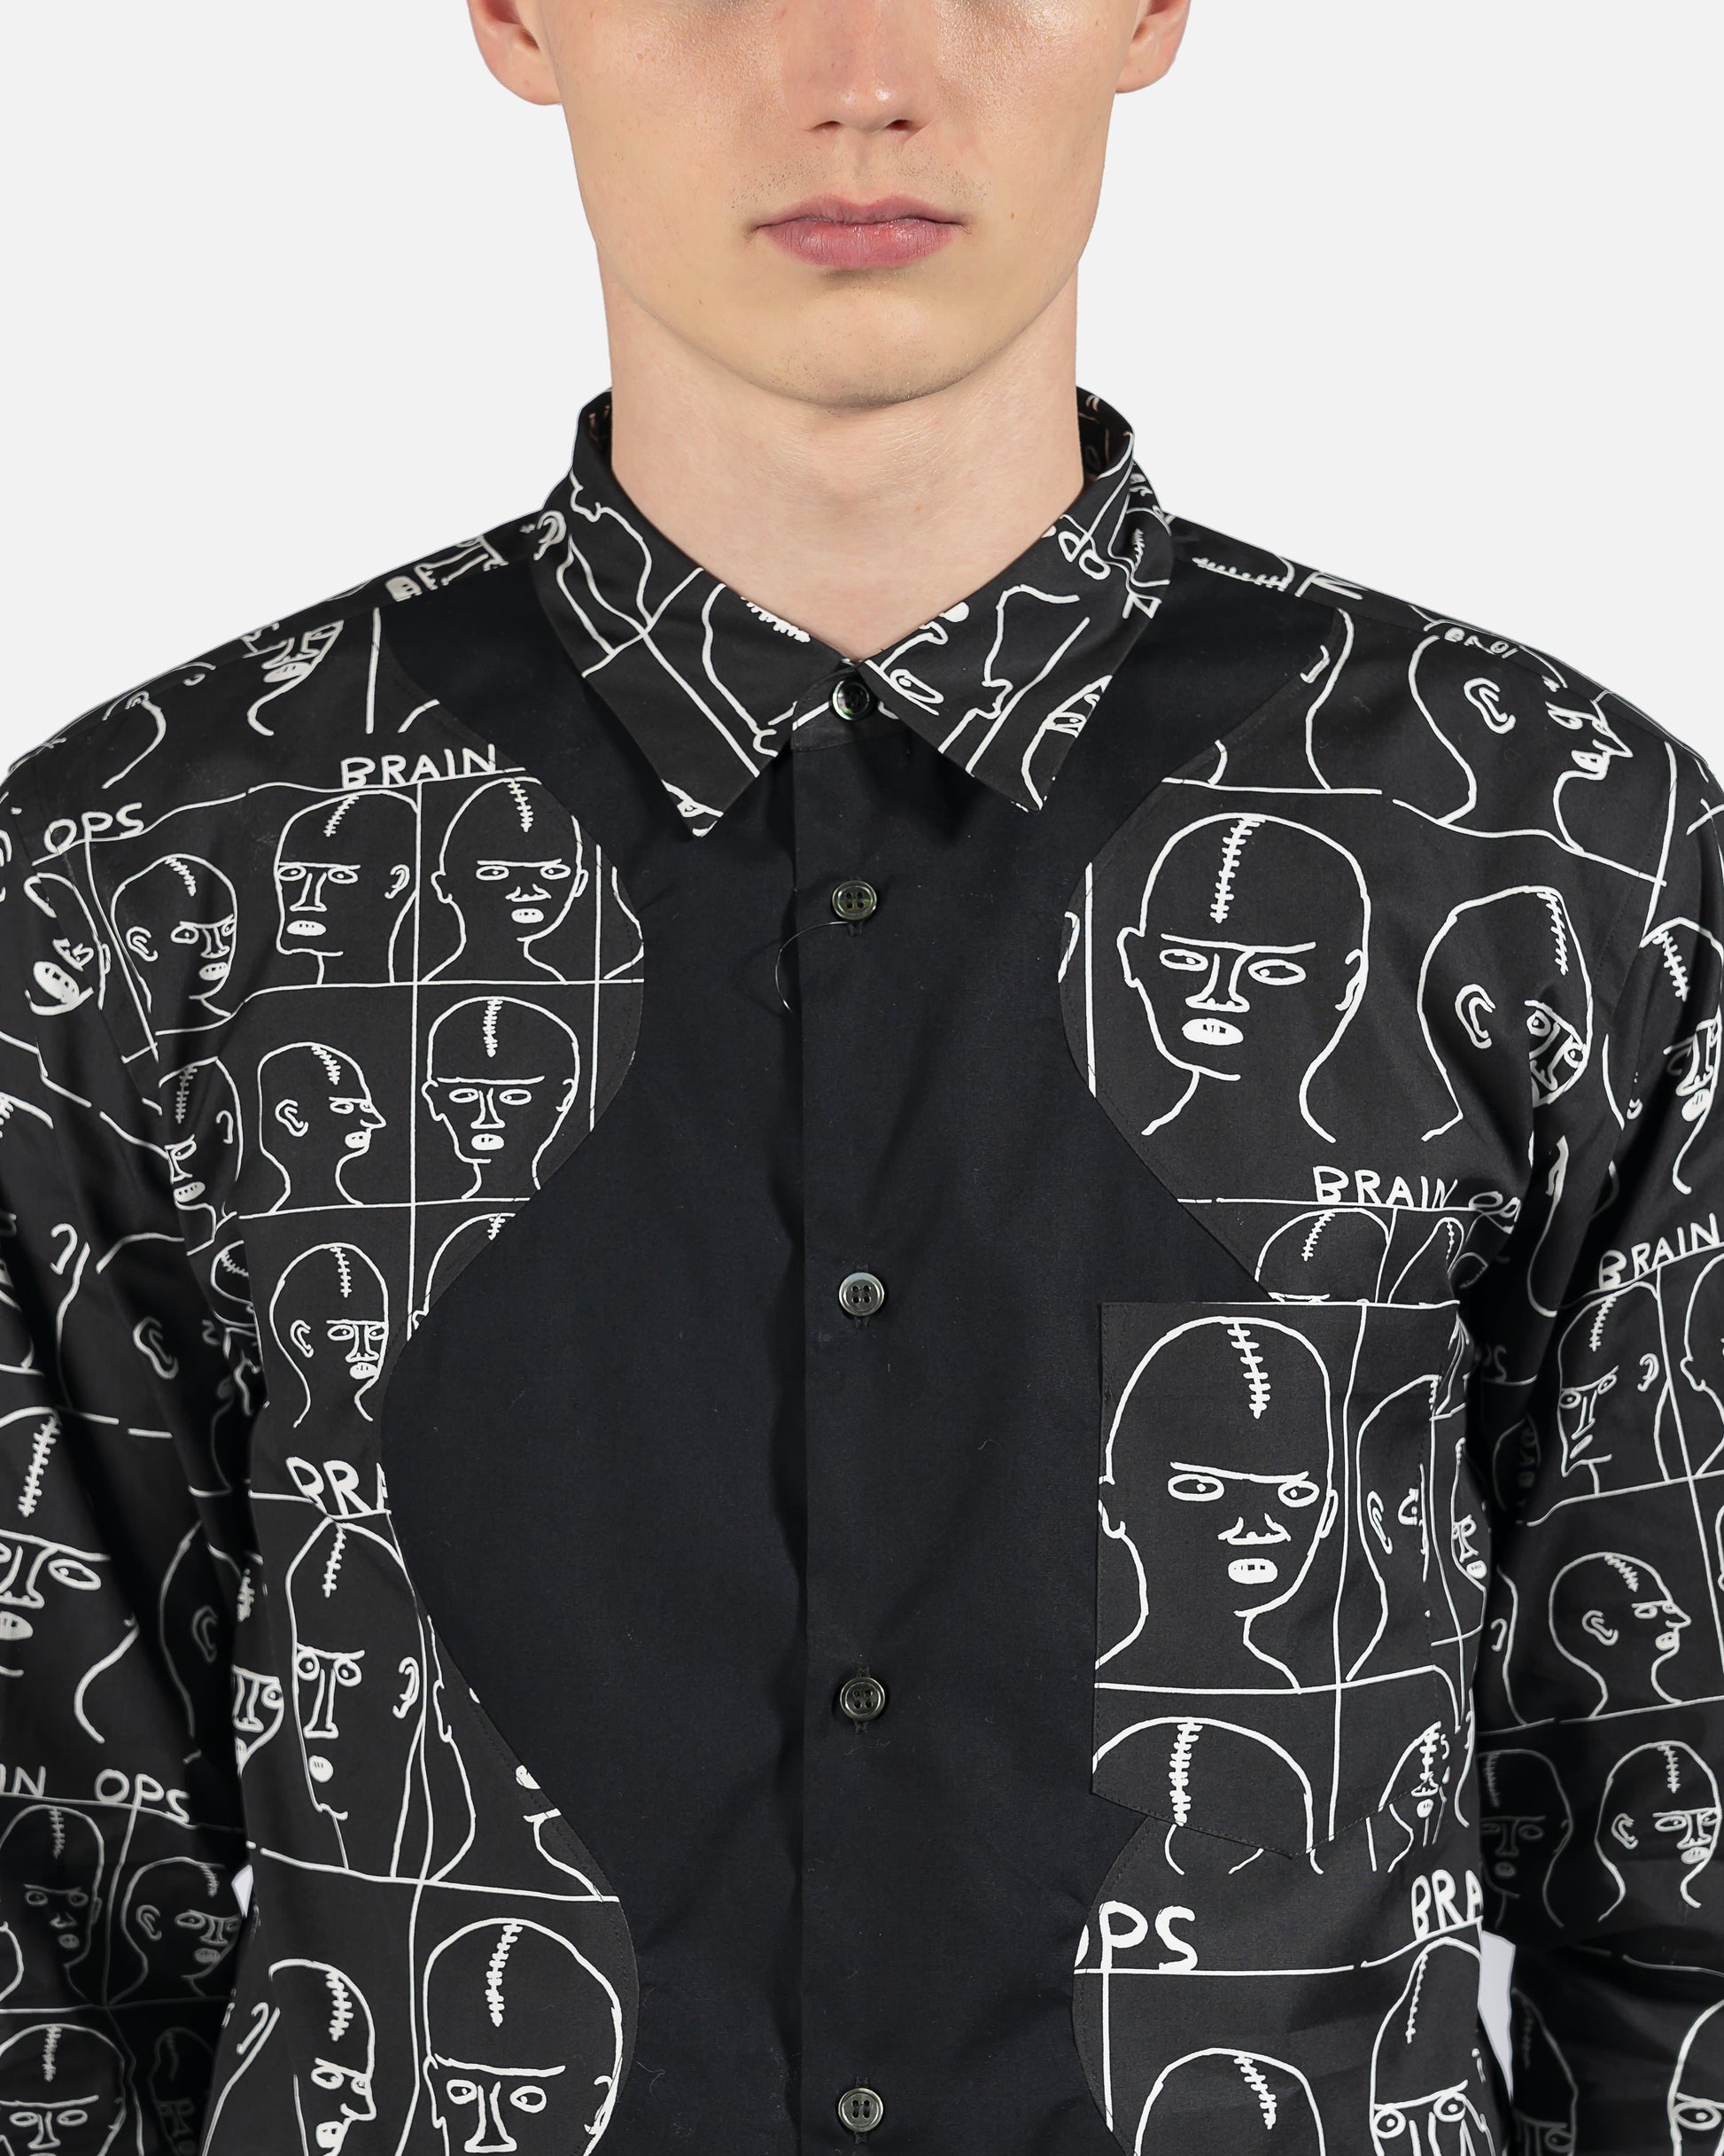 Comme des Garcons Homme Deux Men's Shirts David Shrigley Button-Up in Black